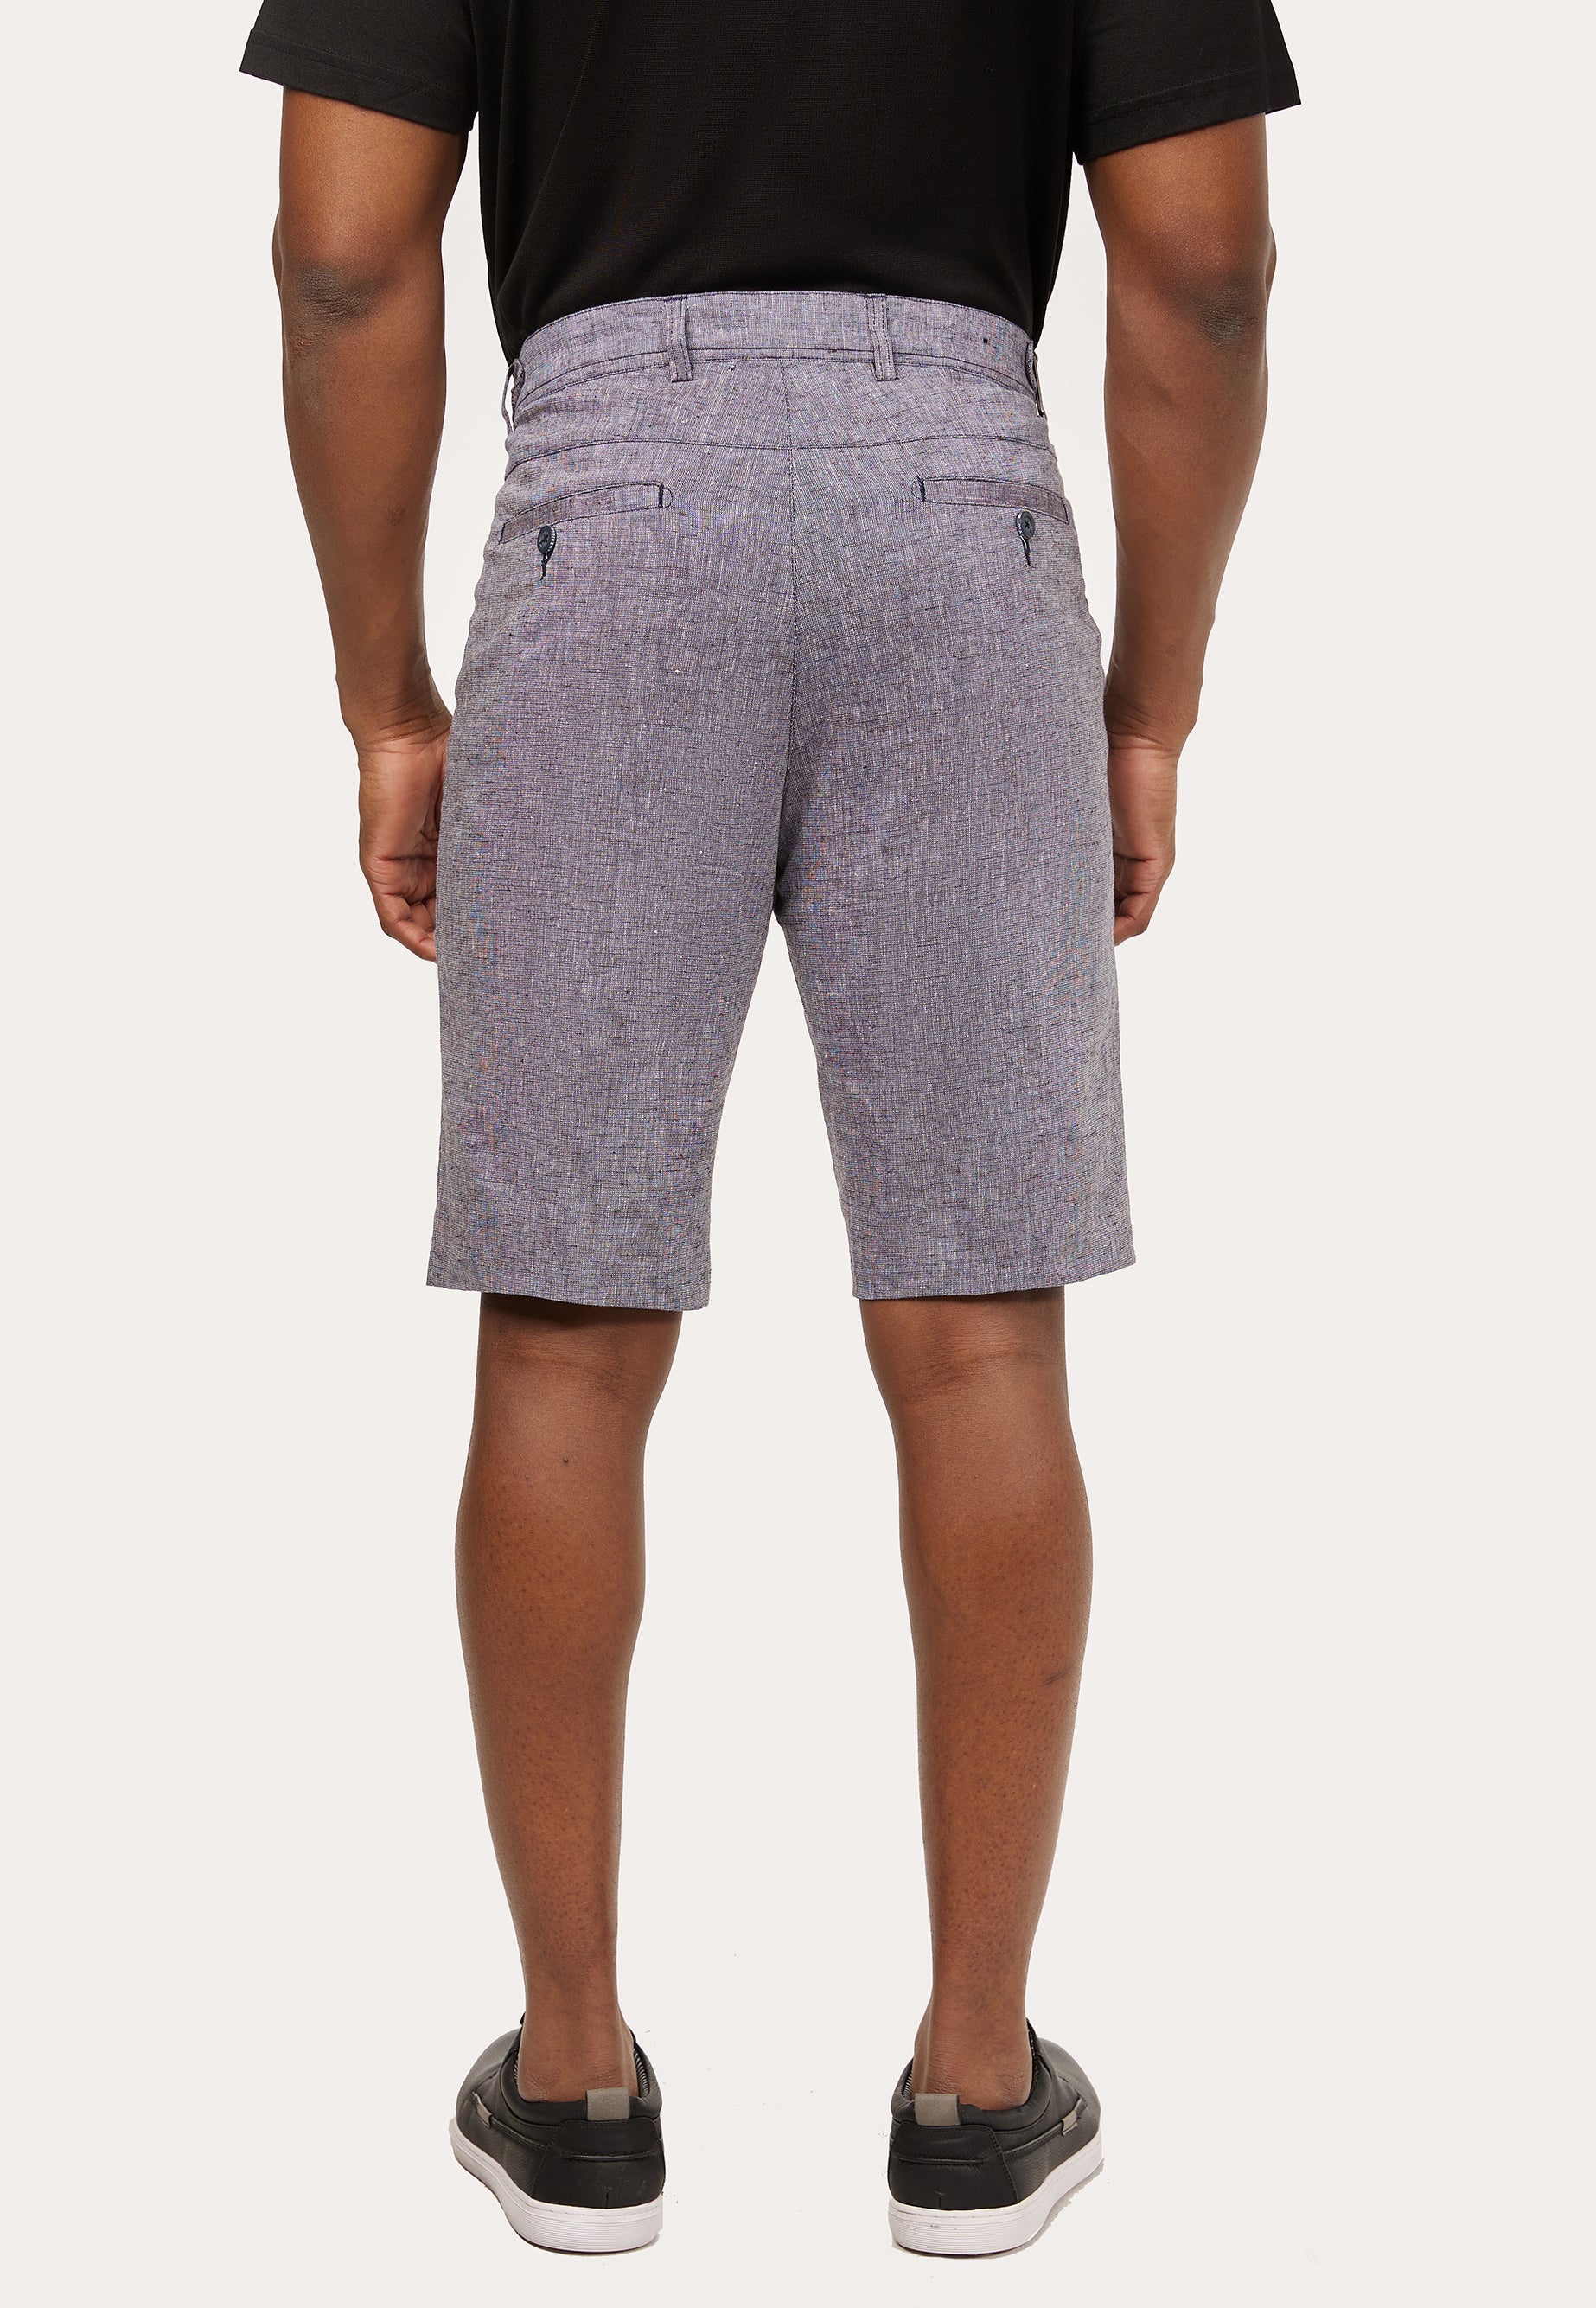 Two-tone stretch linen Bermuda shorts